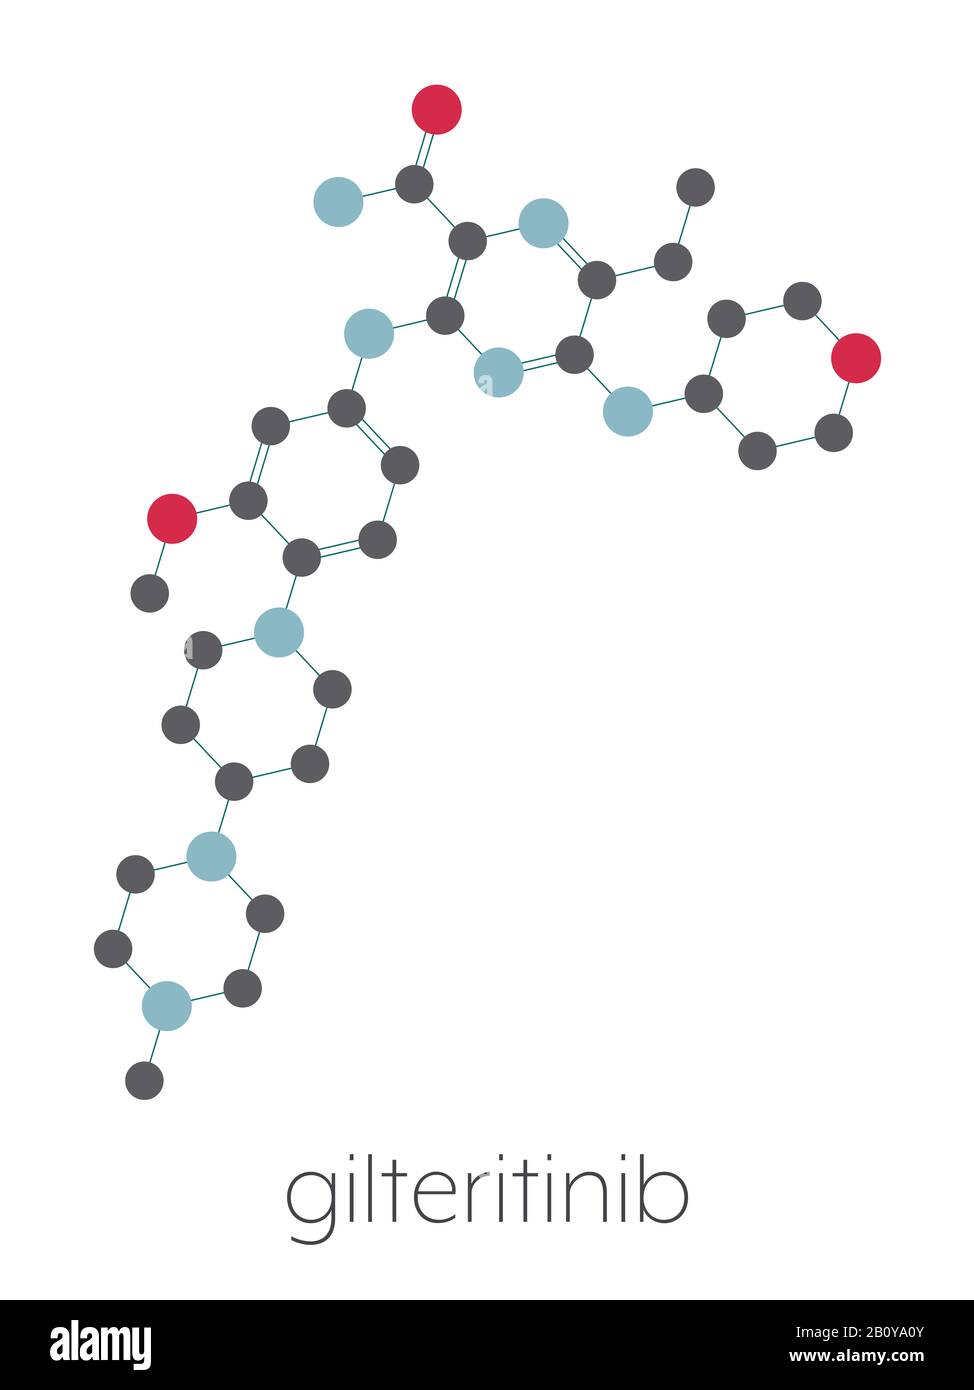 Gilteritinib cancer drug molecule, illustration Stock Photo